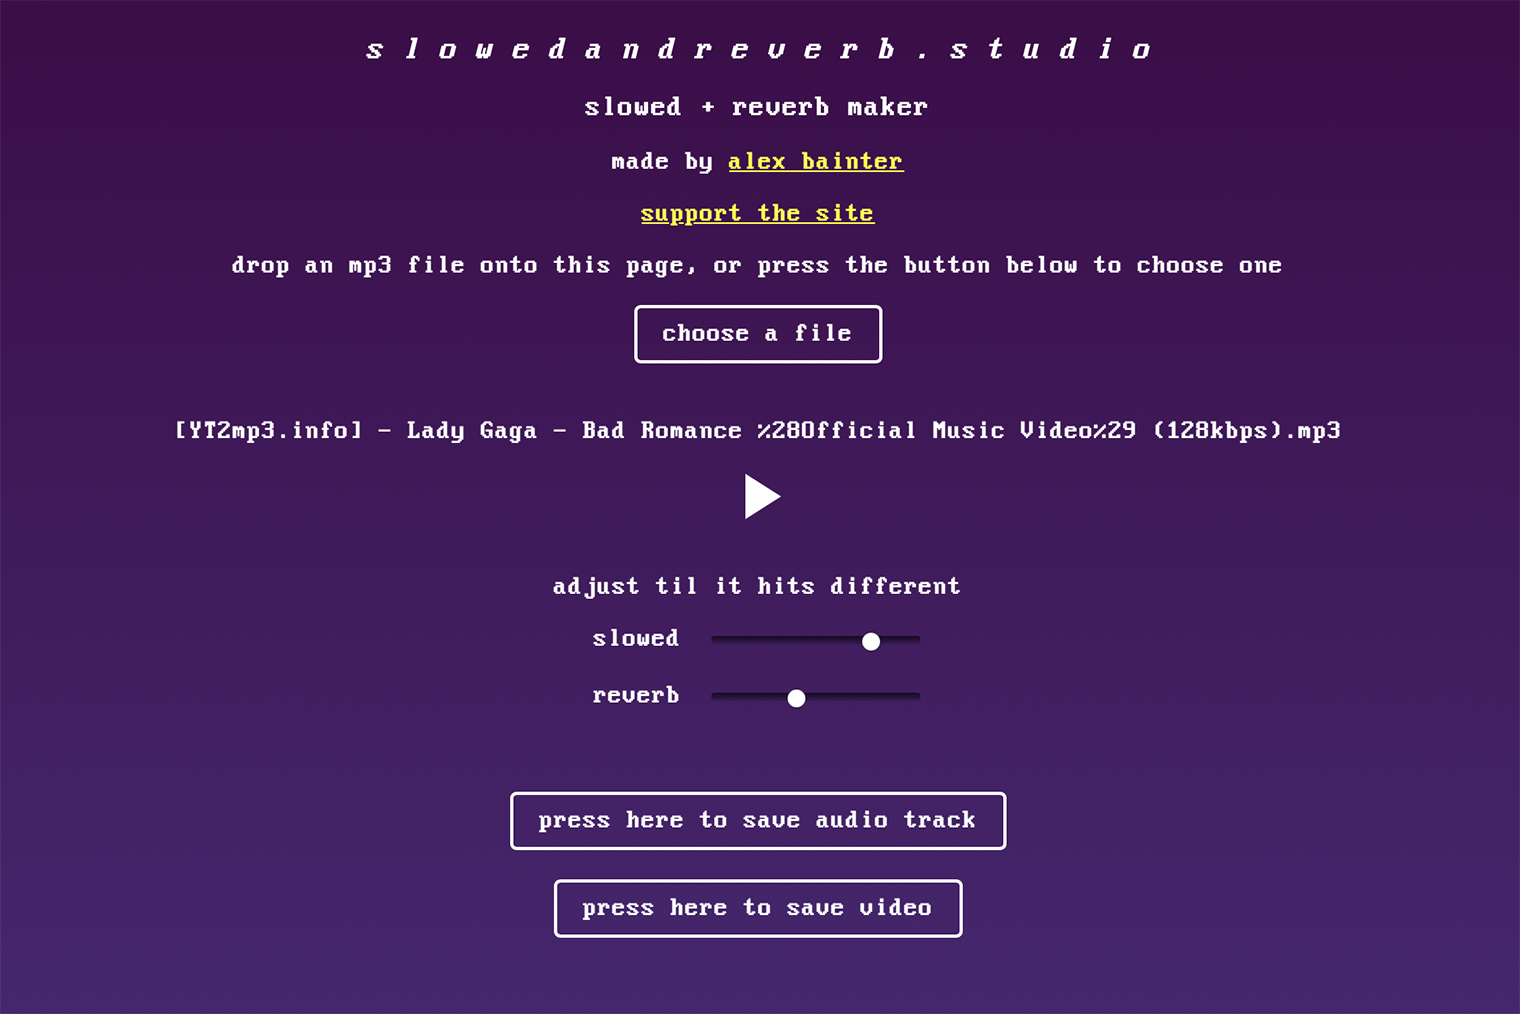 Сайт slowedreverb.studio